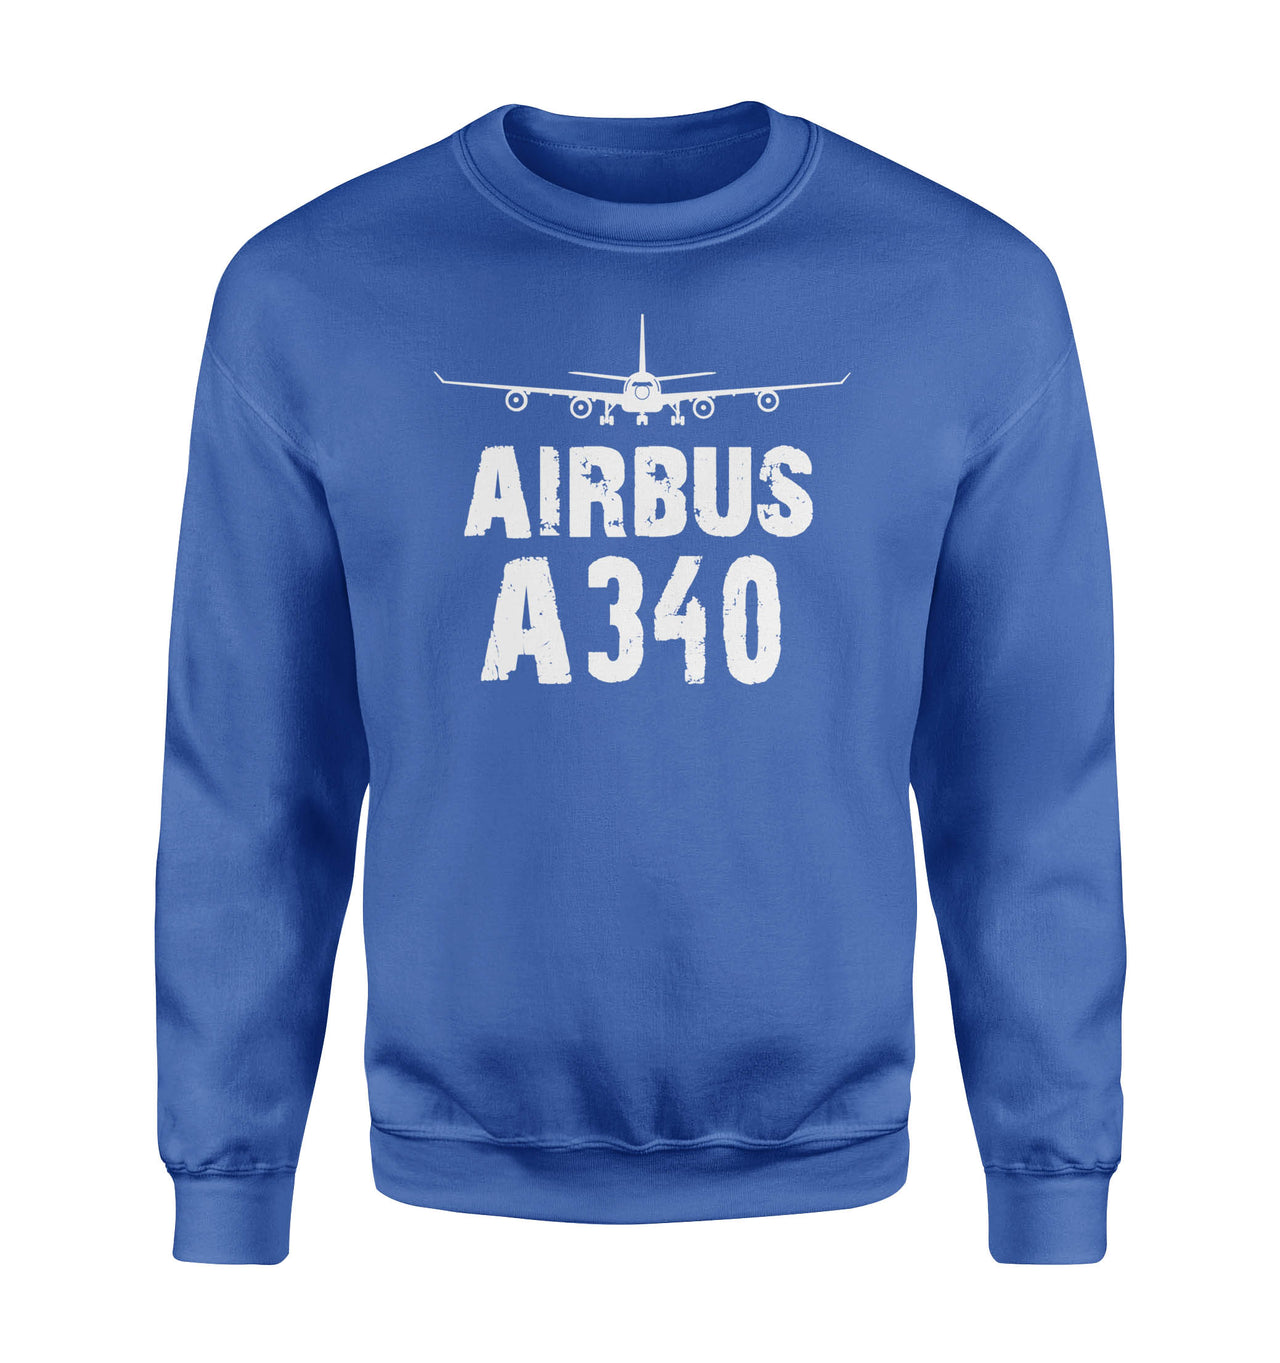 Airbus A340 & Plane Designed Sweatshirts